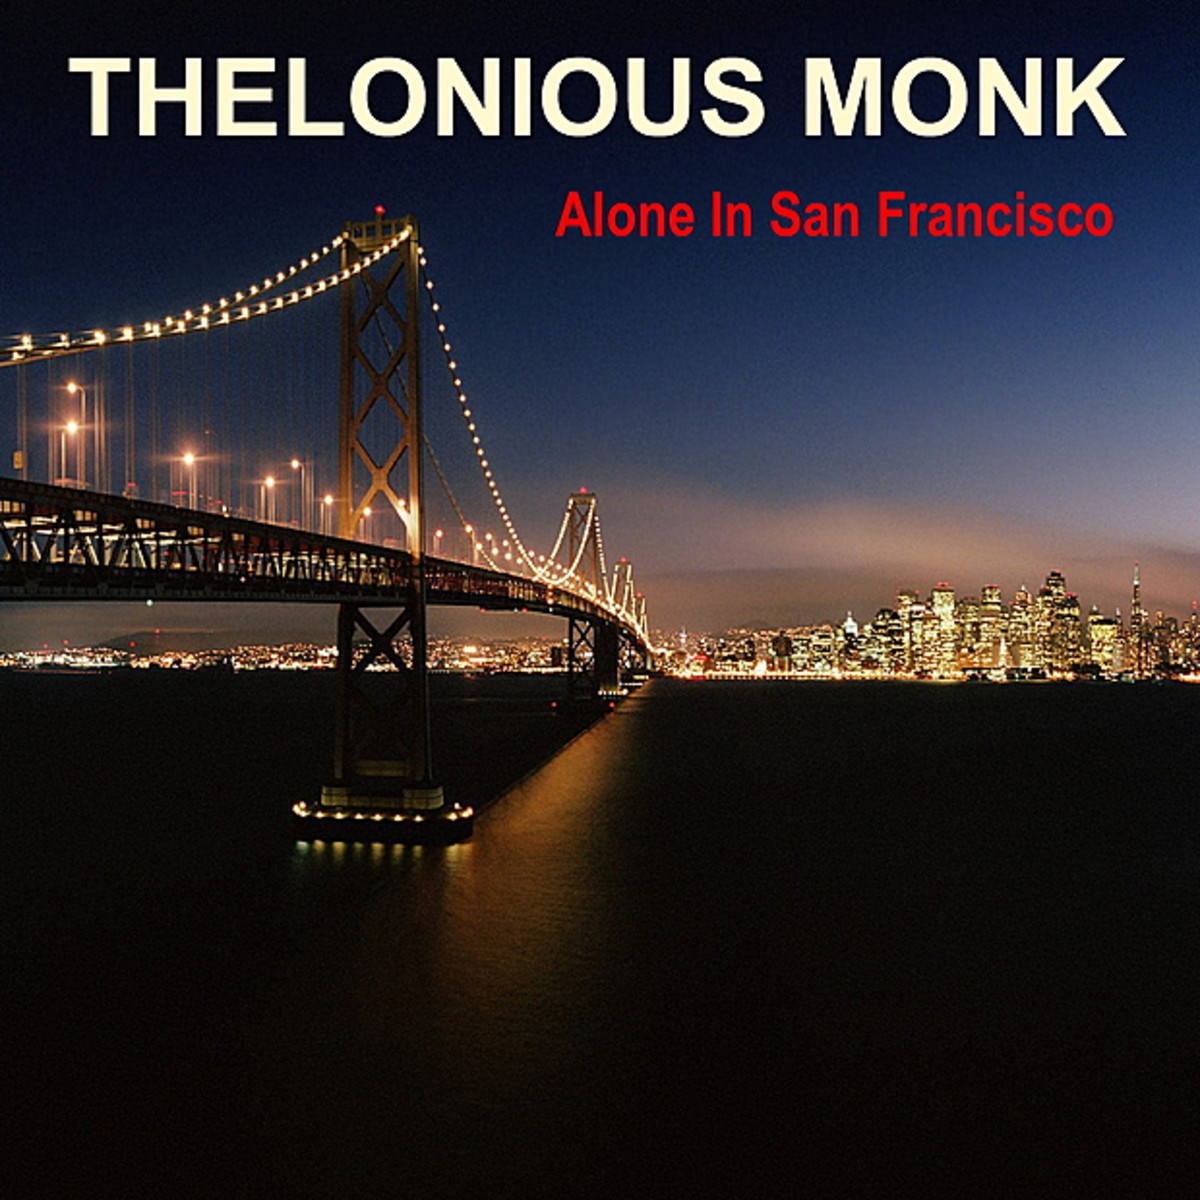 Alone in San Francisco